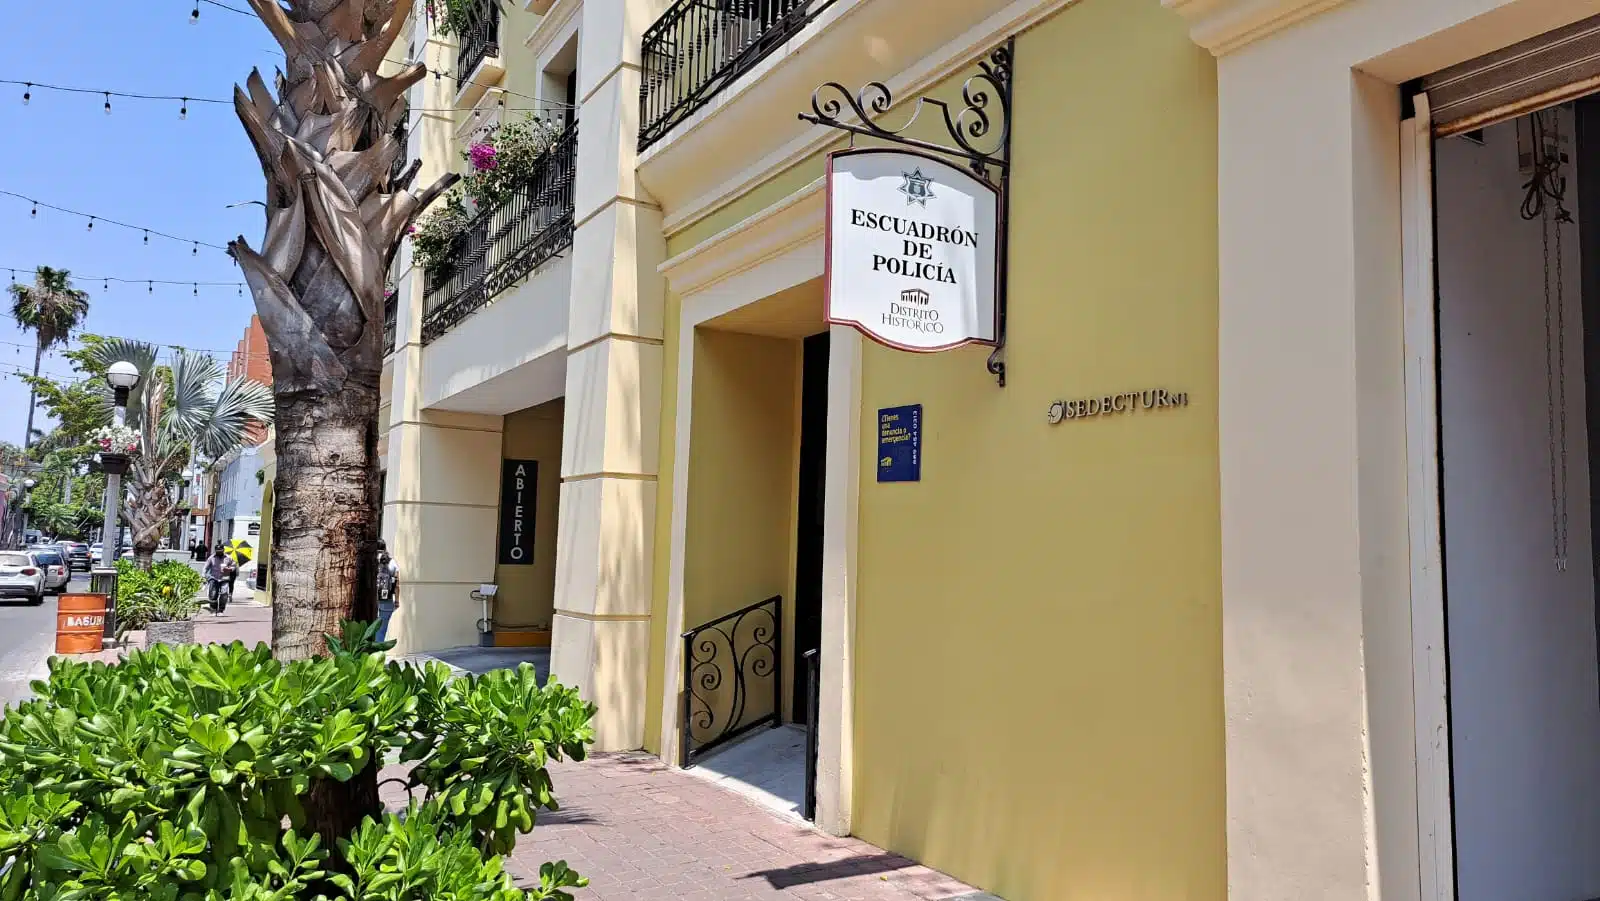 Base del Escuadrón de Policía del Centro Histórico de Mazatlán